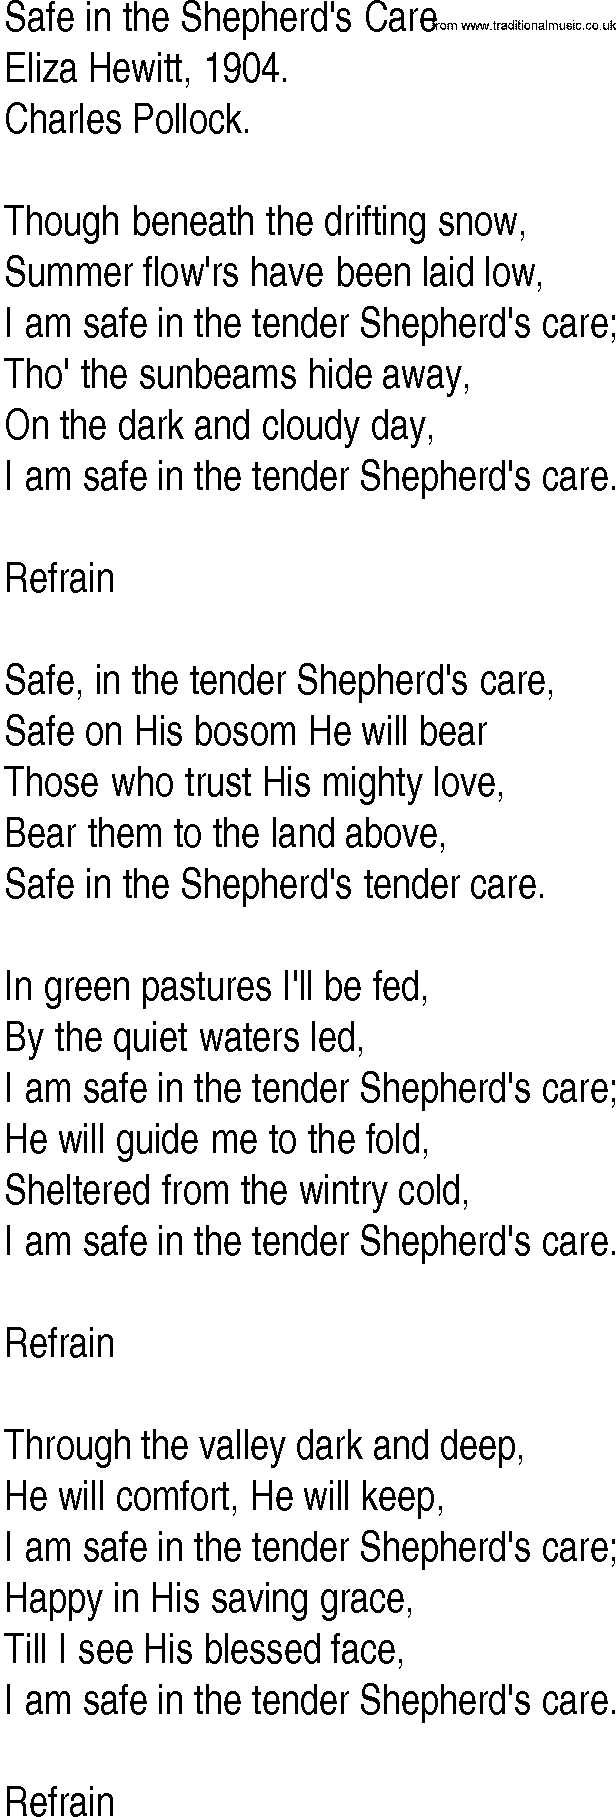 Hymn and Gospel Song: Safe in the Shepherd's Care by Eliza Hewitt lyrics